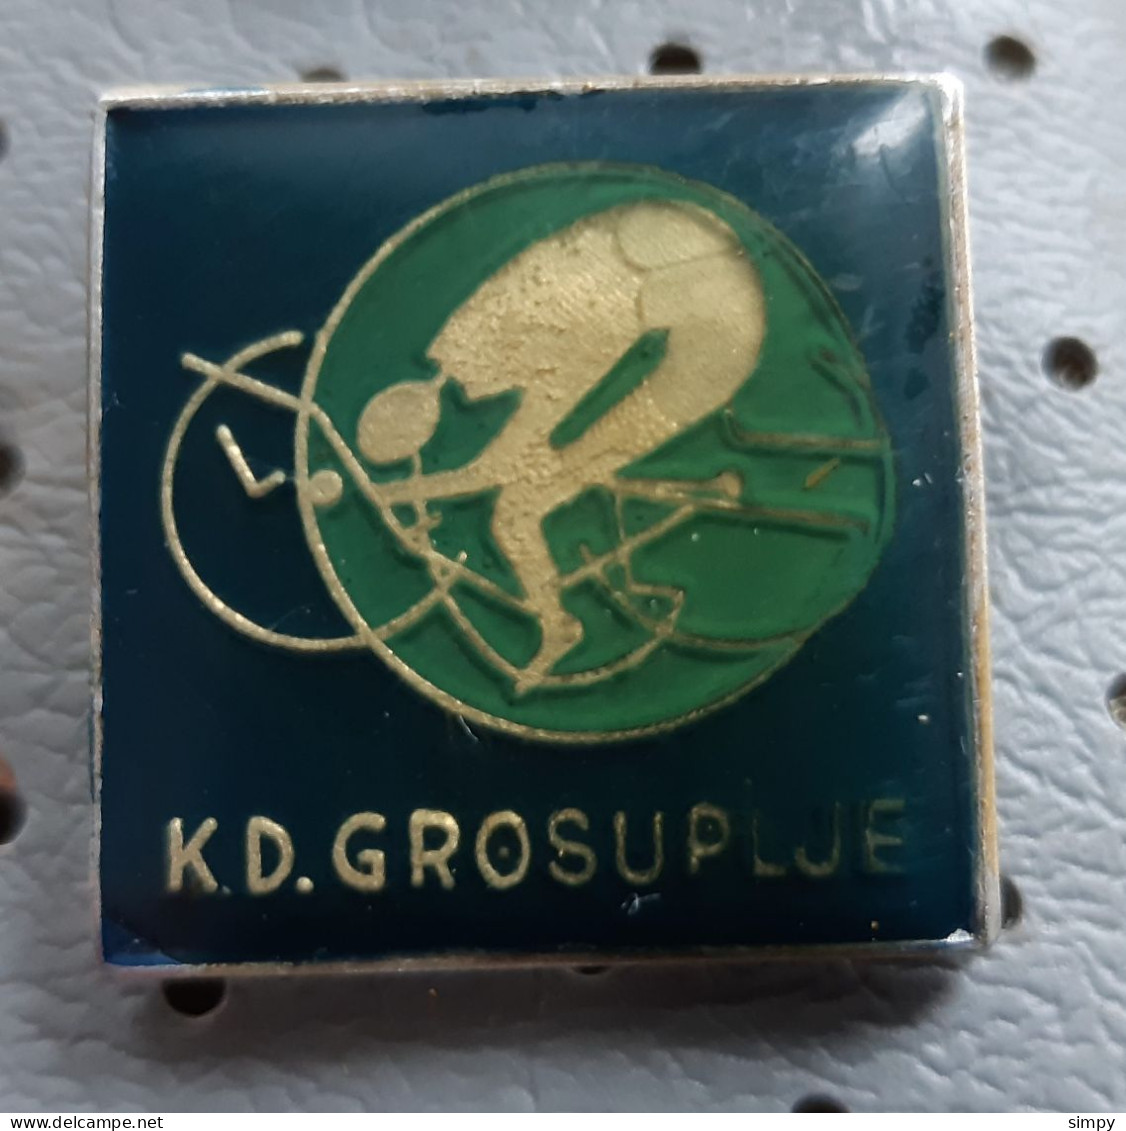 Cycling Club KD Grosuplje Slovenia Pin - Cycling